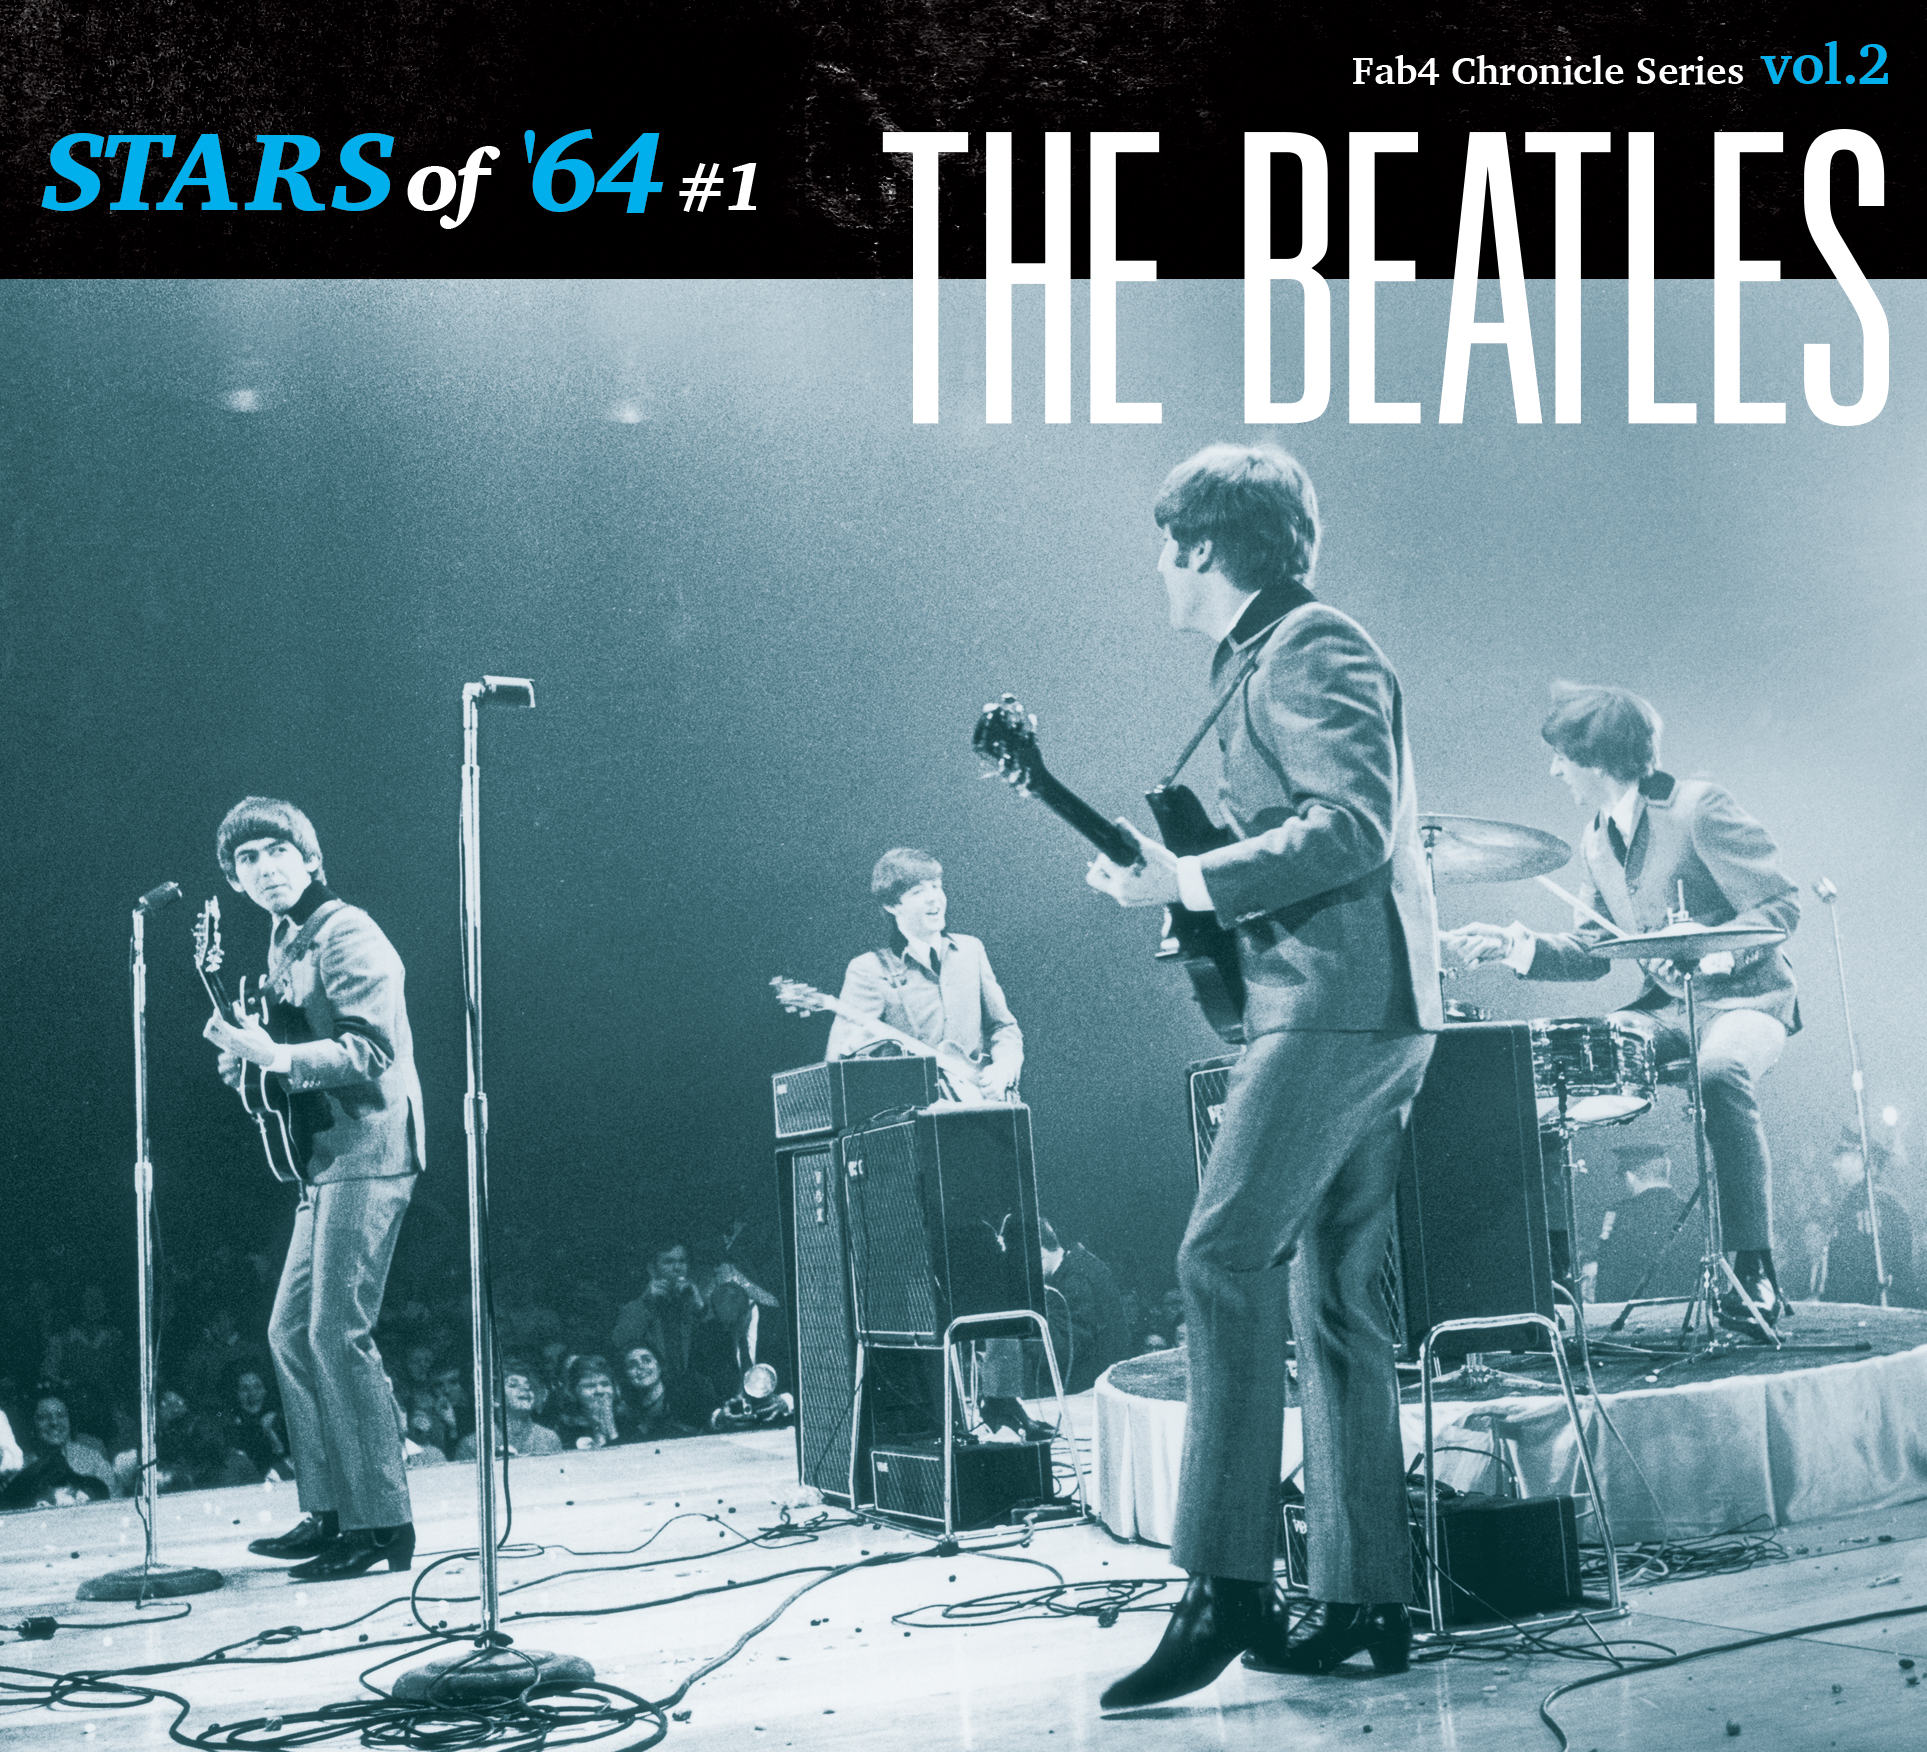 THE BEATLES / STARS of ’64 #1 Washington Coliseum